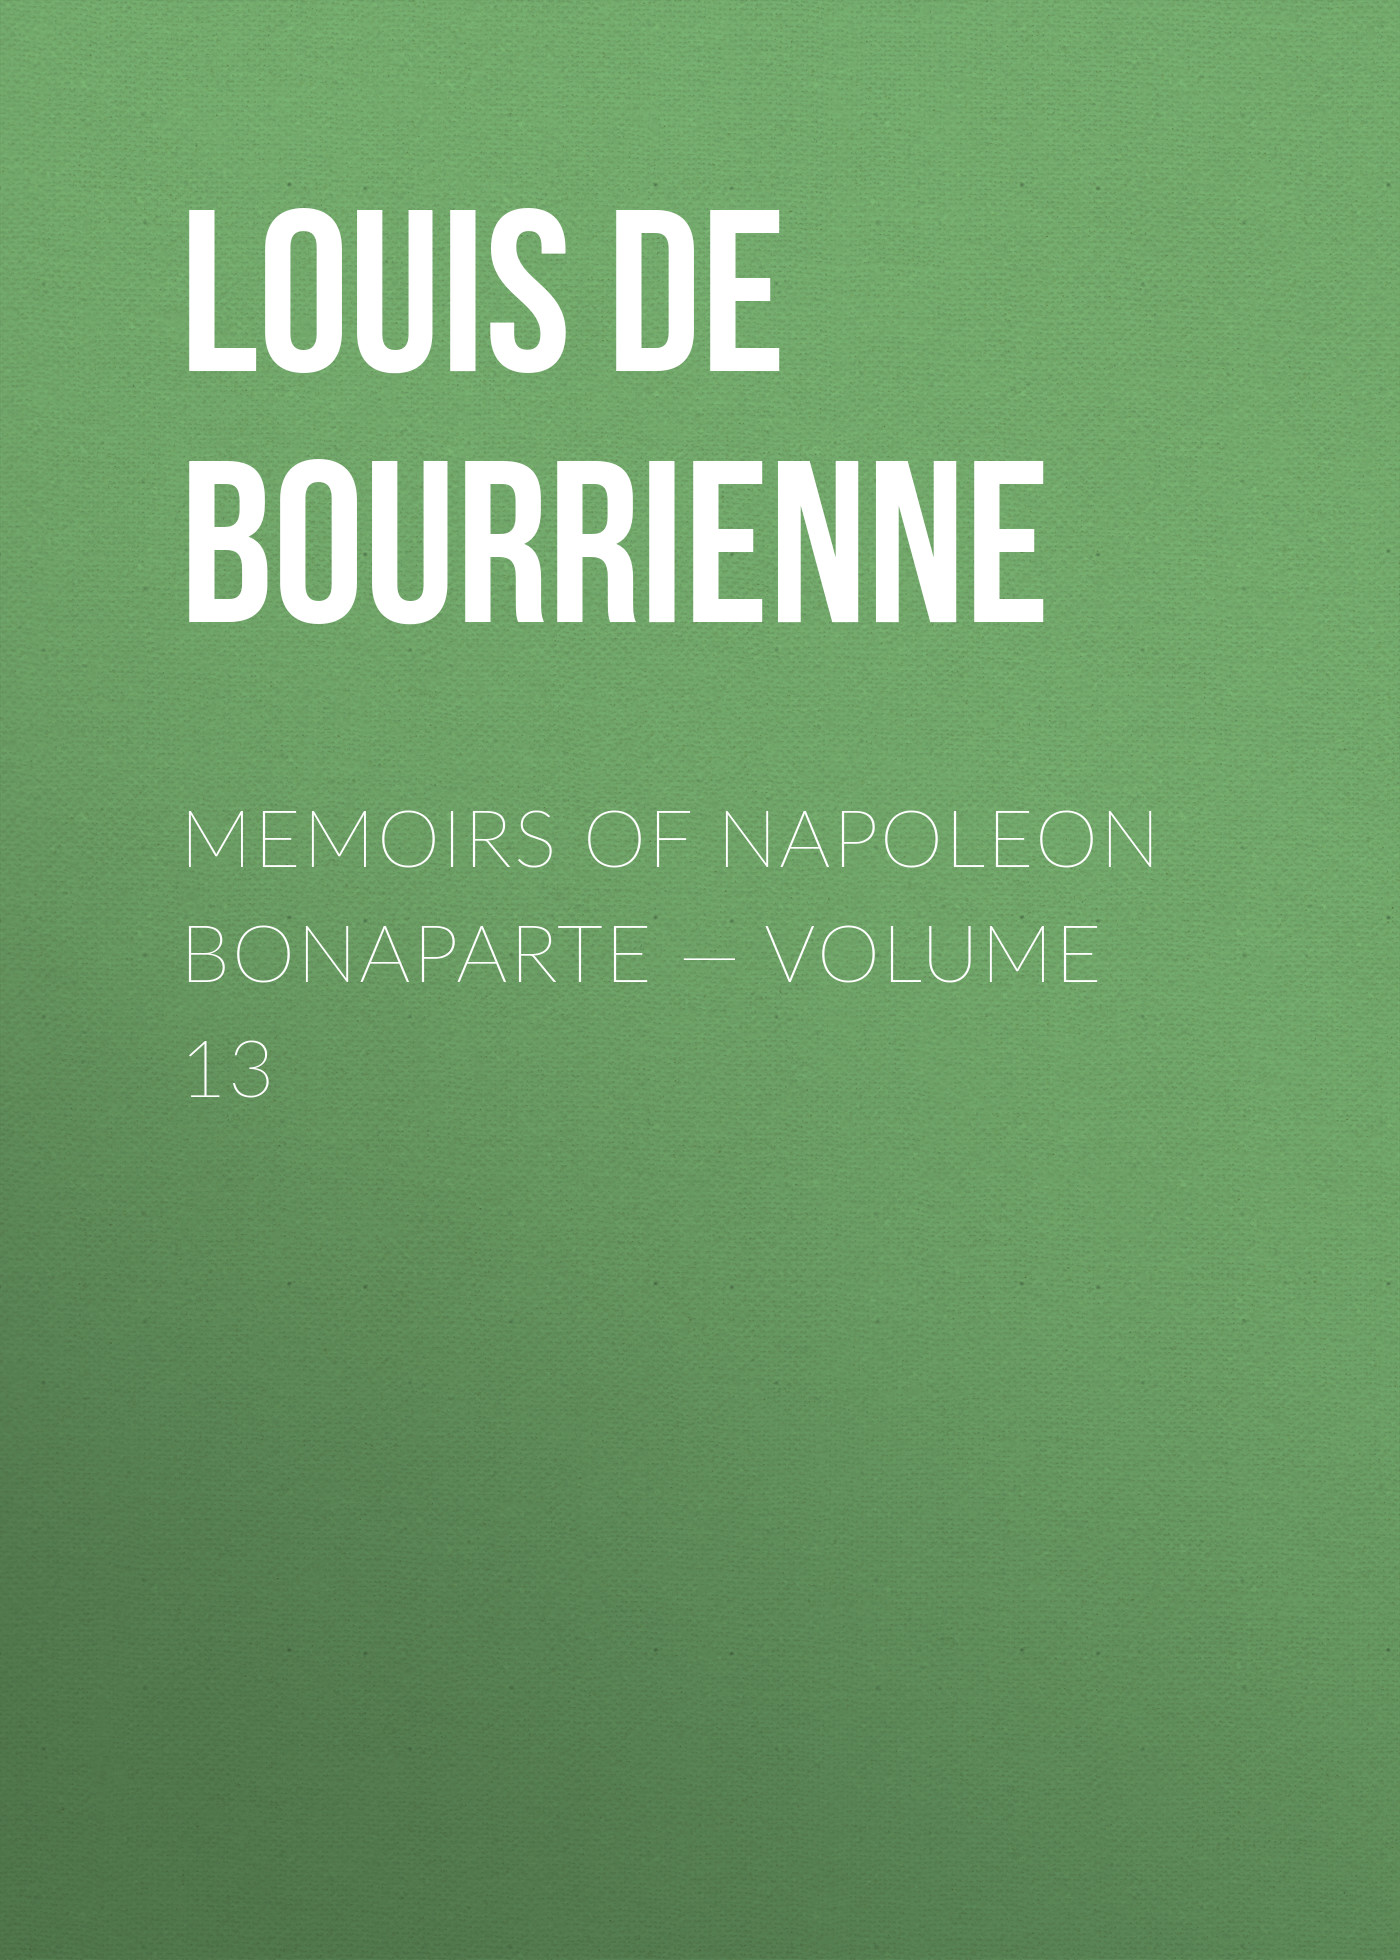 Memoirs of Napoleon Bonaparte— Volume 13